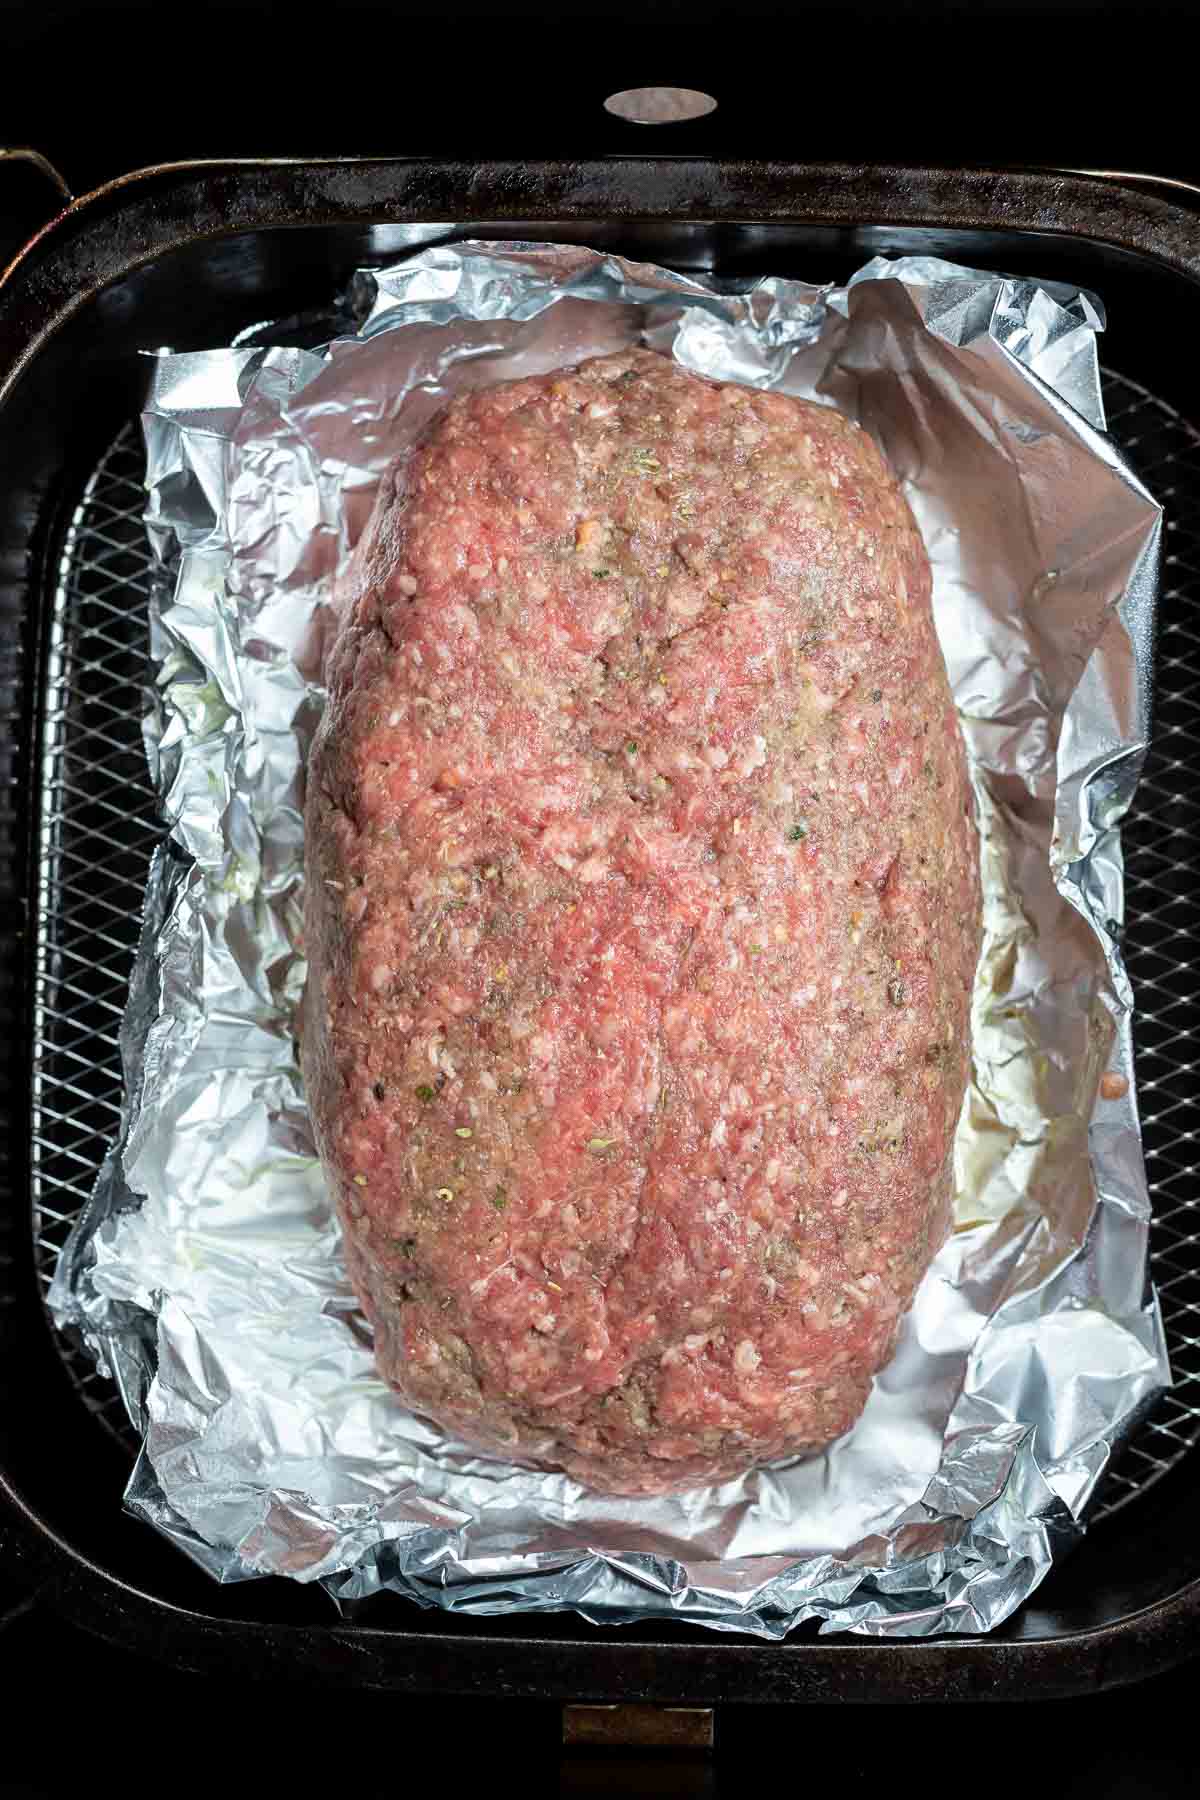 uncooked meatloaf in air fryer basket